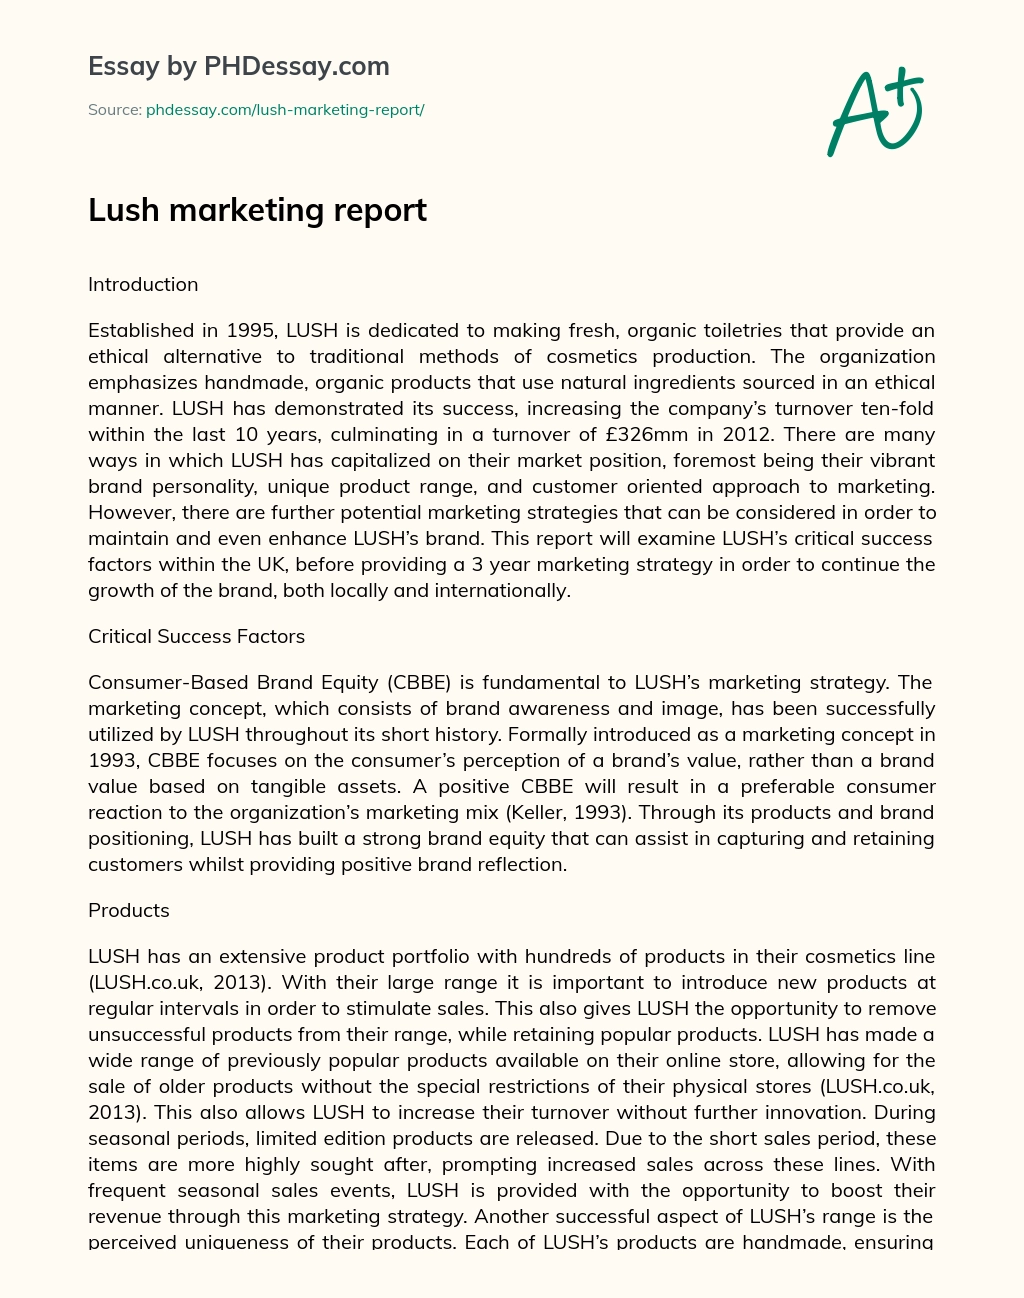 Lush Marketing Report essay